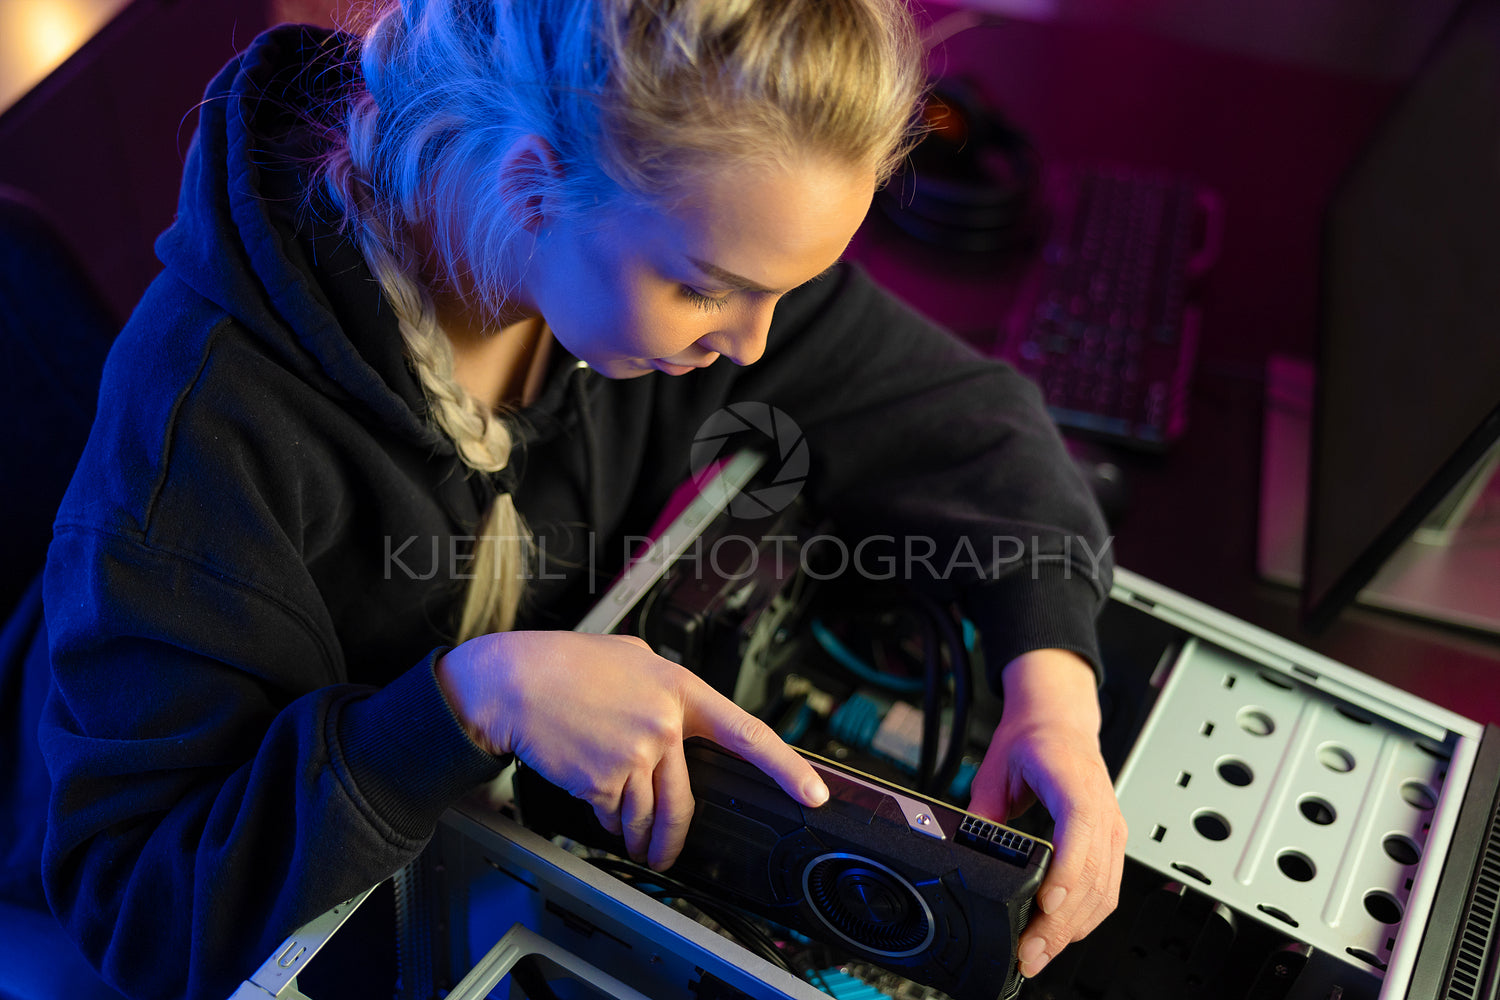 E-sport Gamer Girl Installing New GPU Video Card in Her Gaming PC